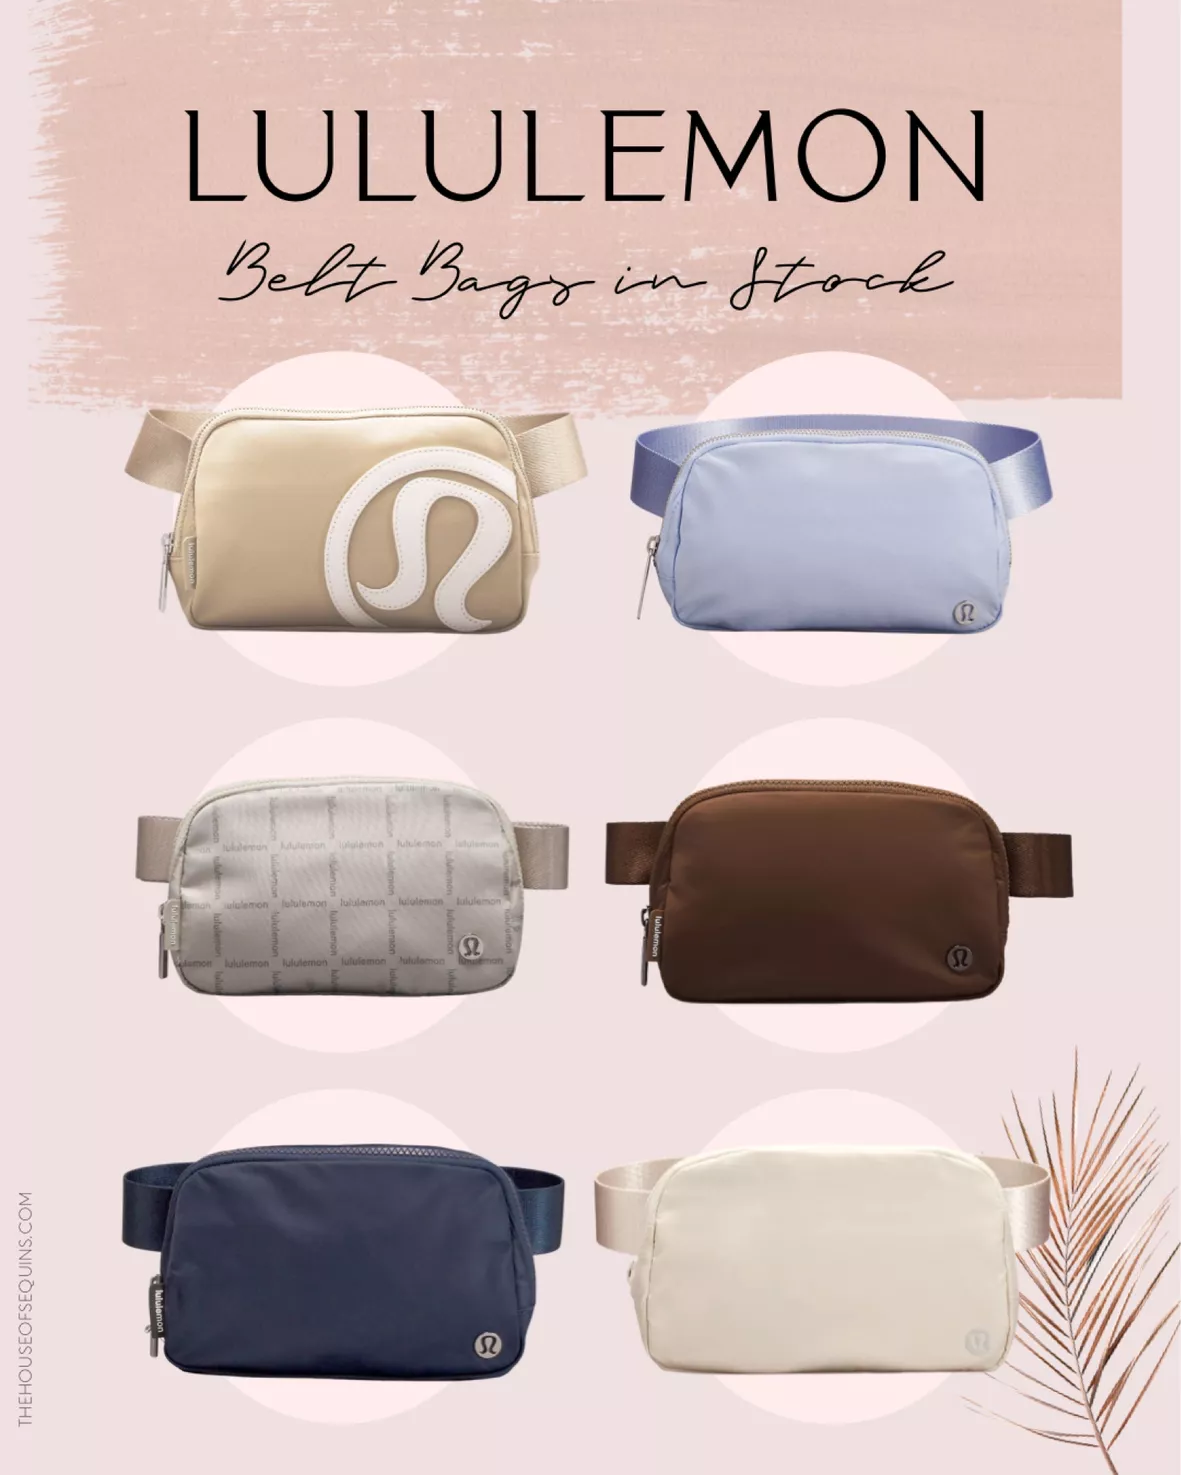 Lululemon Everywhere Belt Bag Restock: Where to Shop the Belt Bag